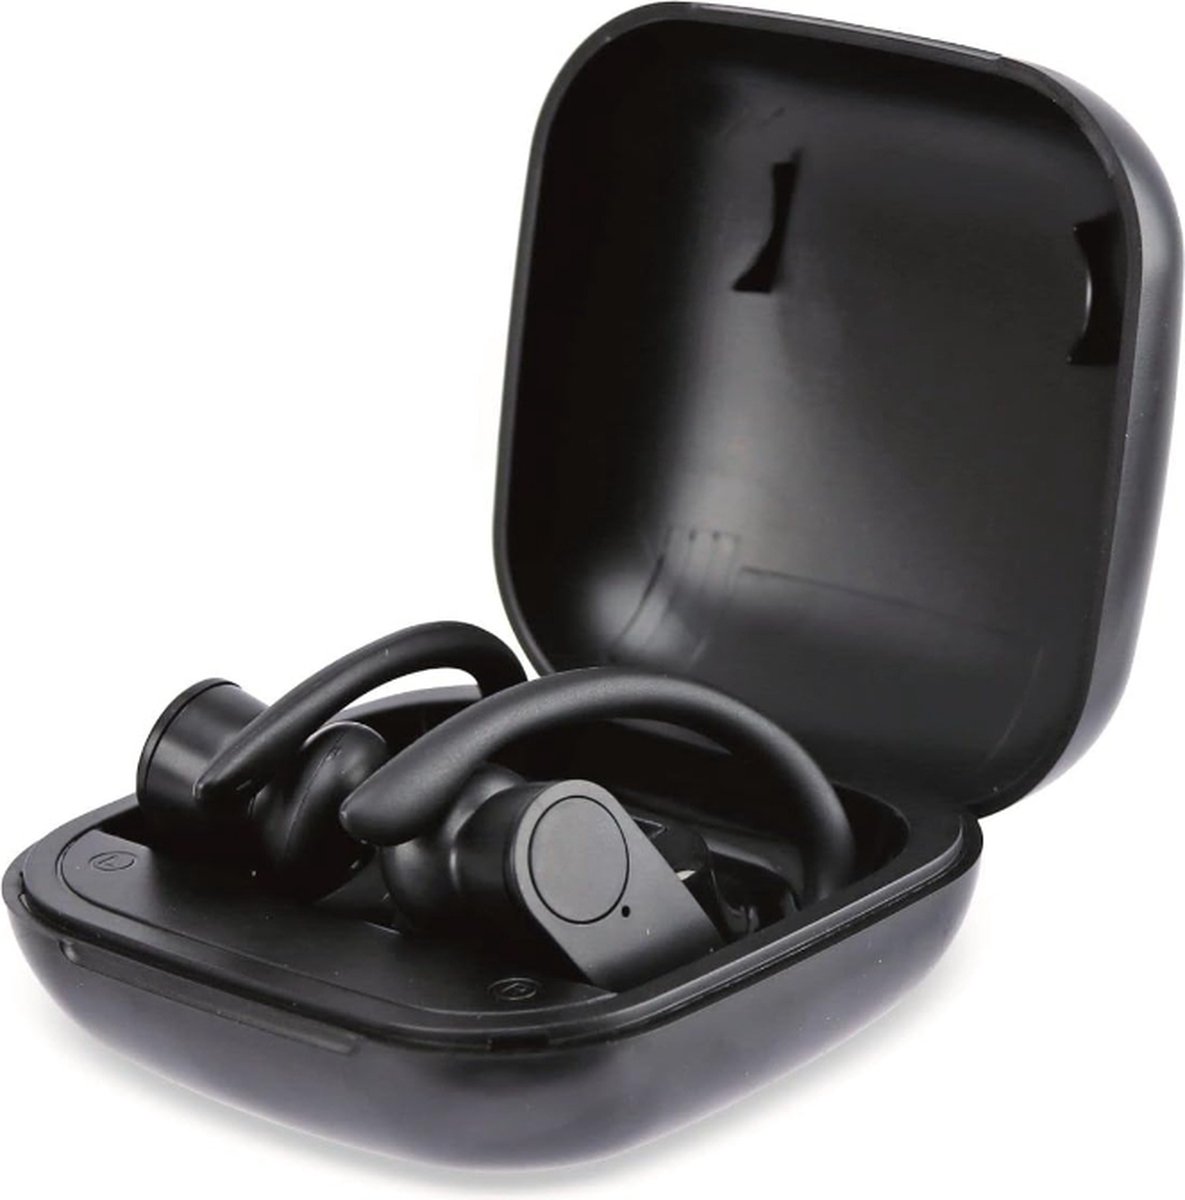 Draadloos Bluetooth 5.0 oordopjes - sport design met microfoon